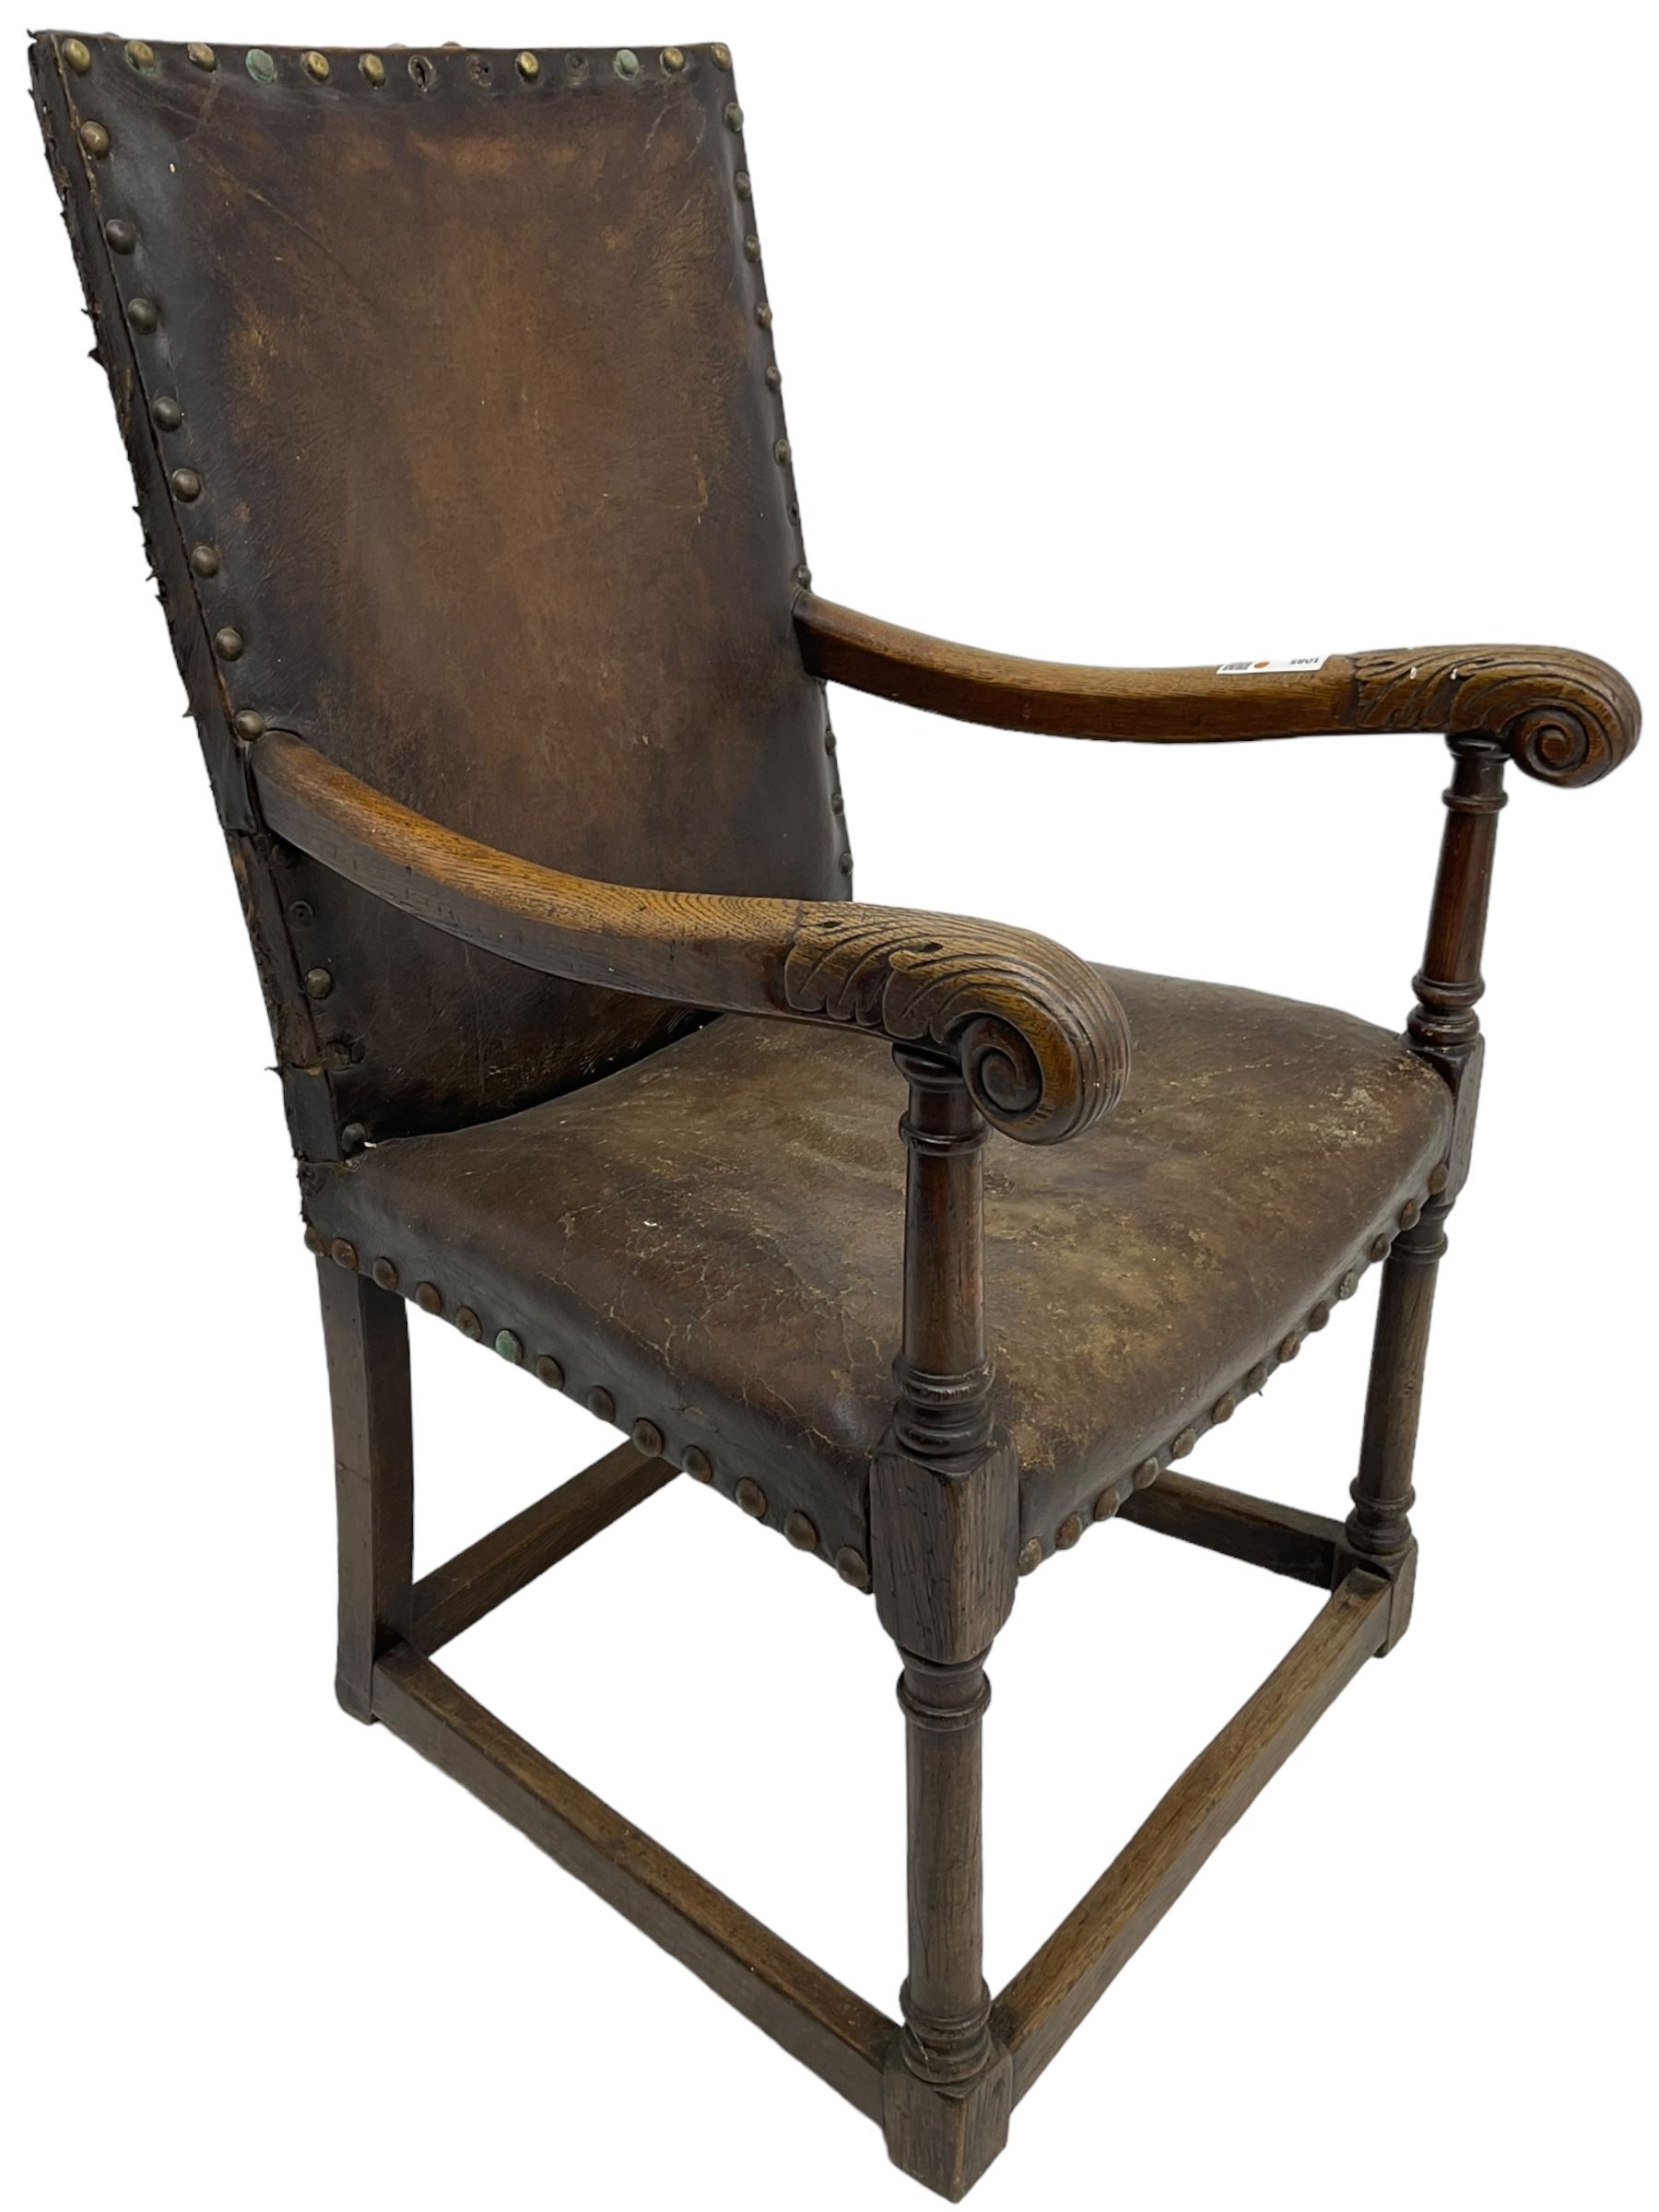 17th century design oak armchair - Image 2 of 6